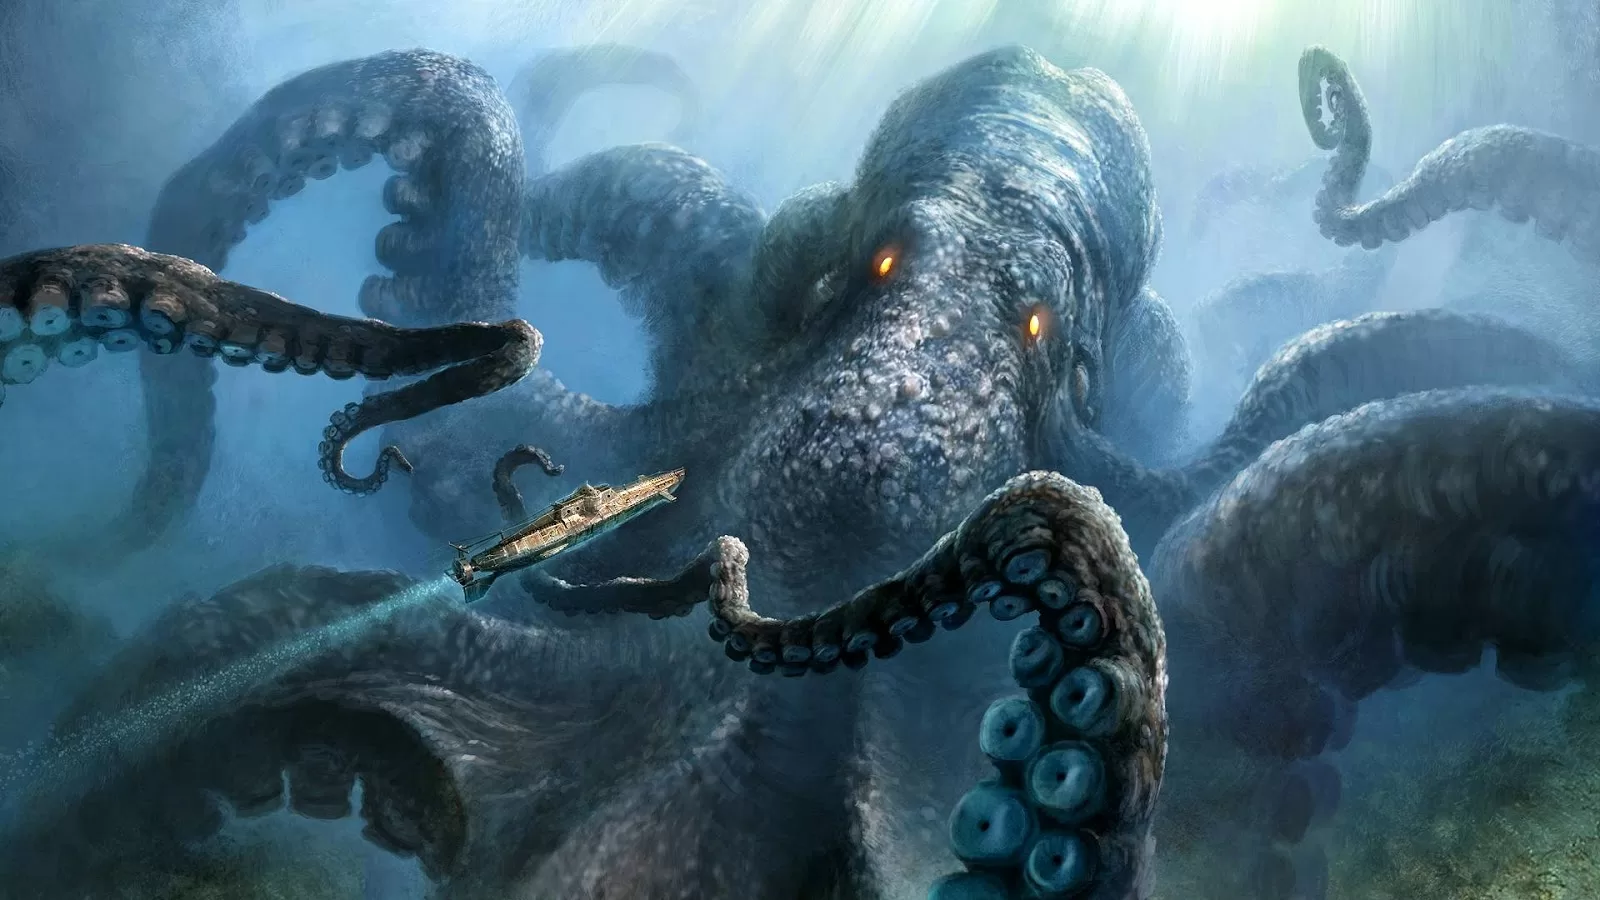 Desvendando os Segredos do Kraken: Mito, Realidade e Mistério por Trás da Criatura Marinha